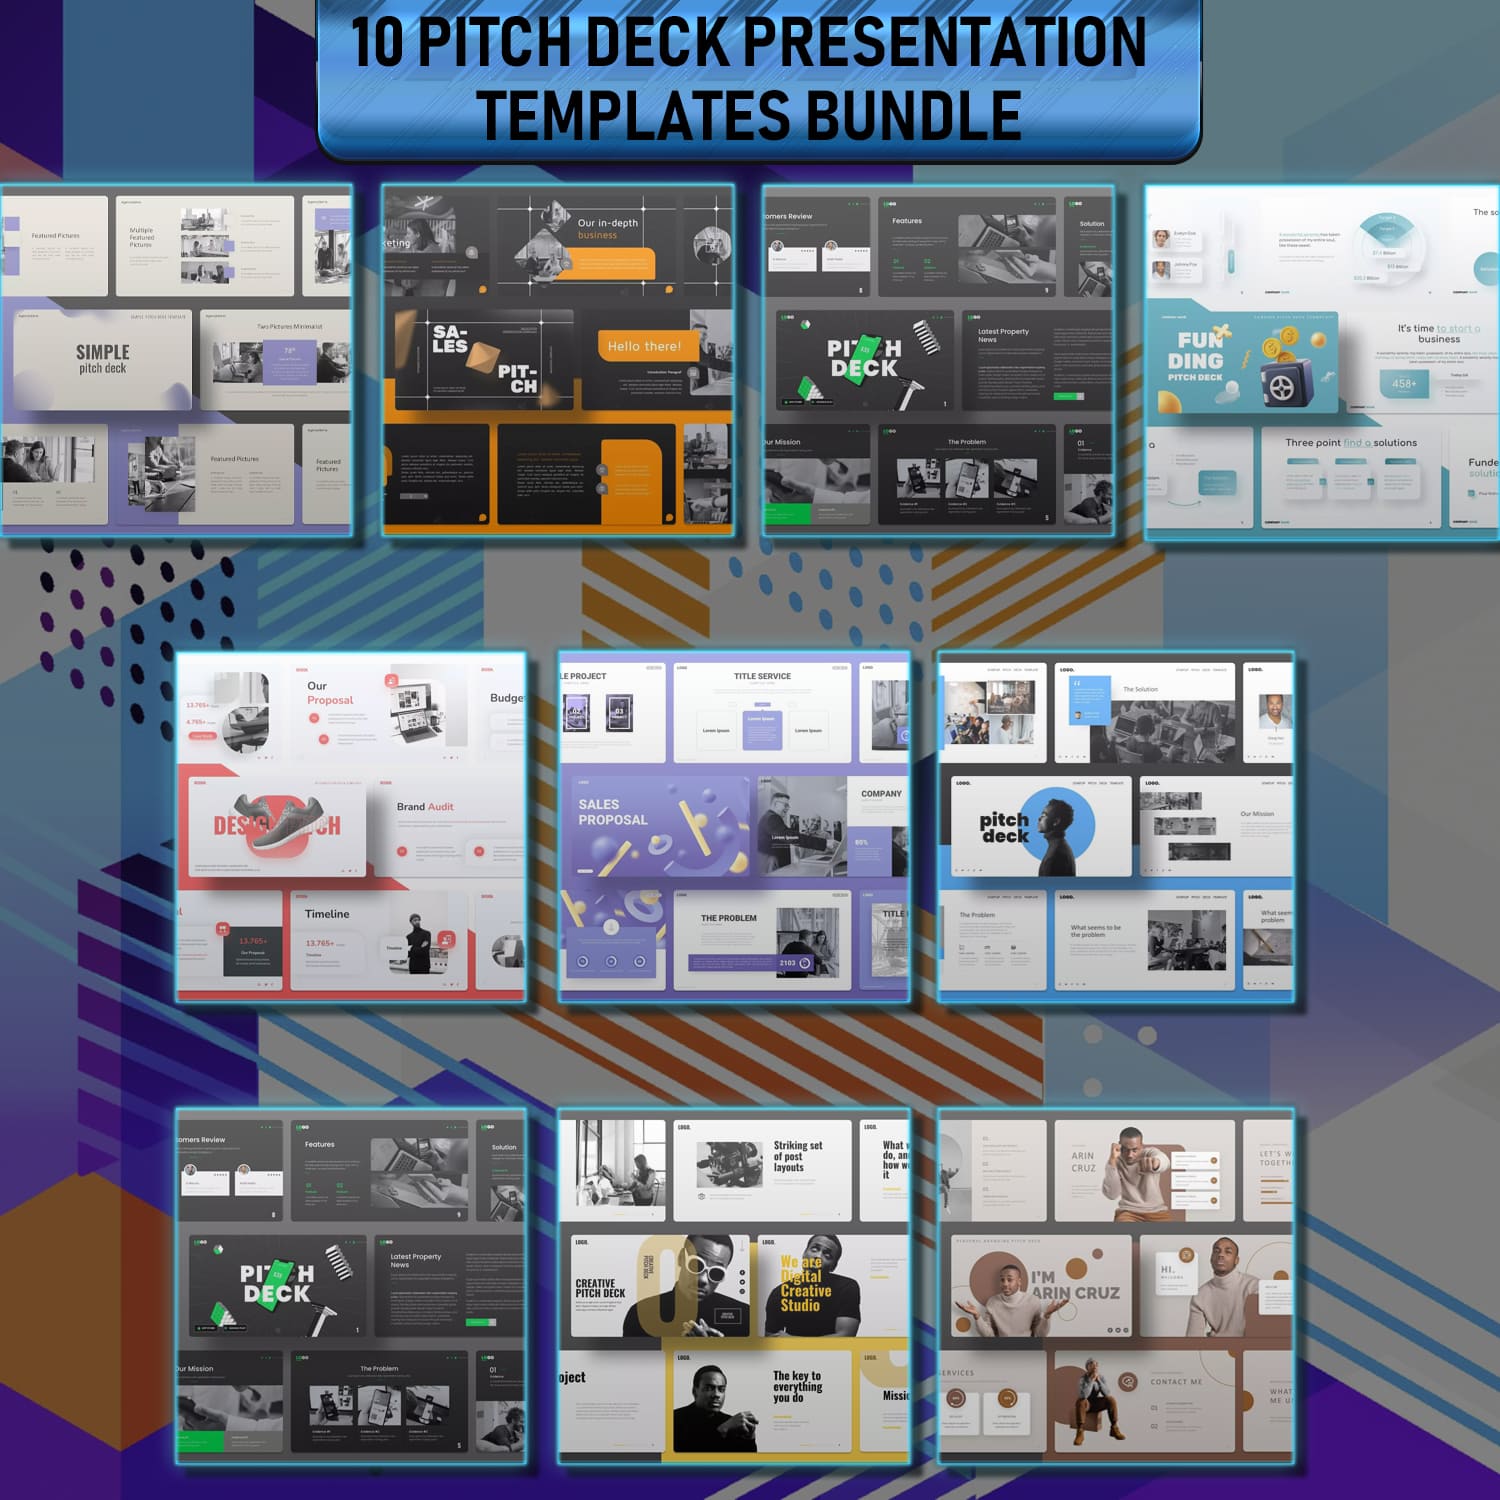 Pitch Deck Powerpoint Templates Bundle cover image.